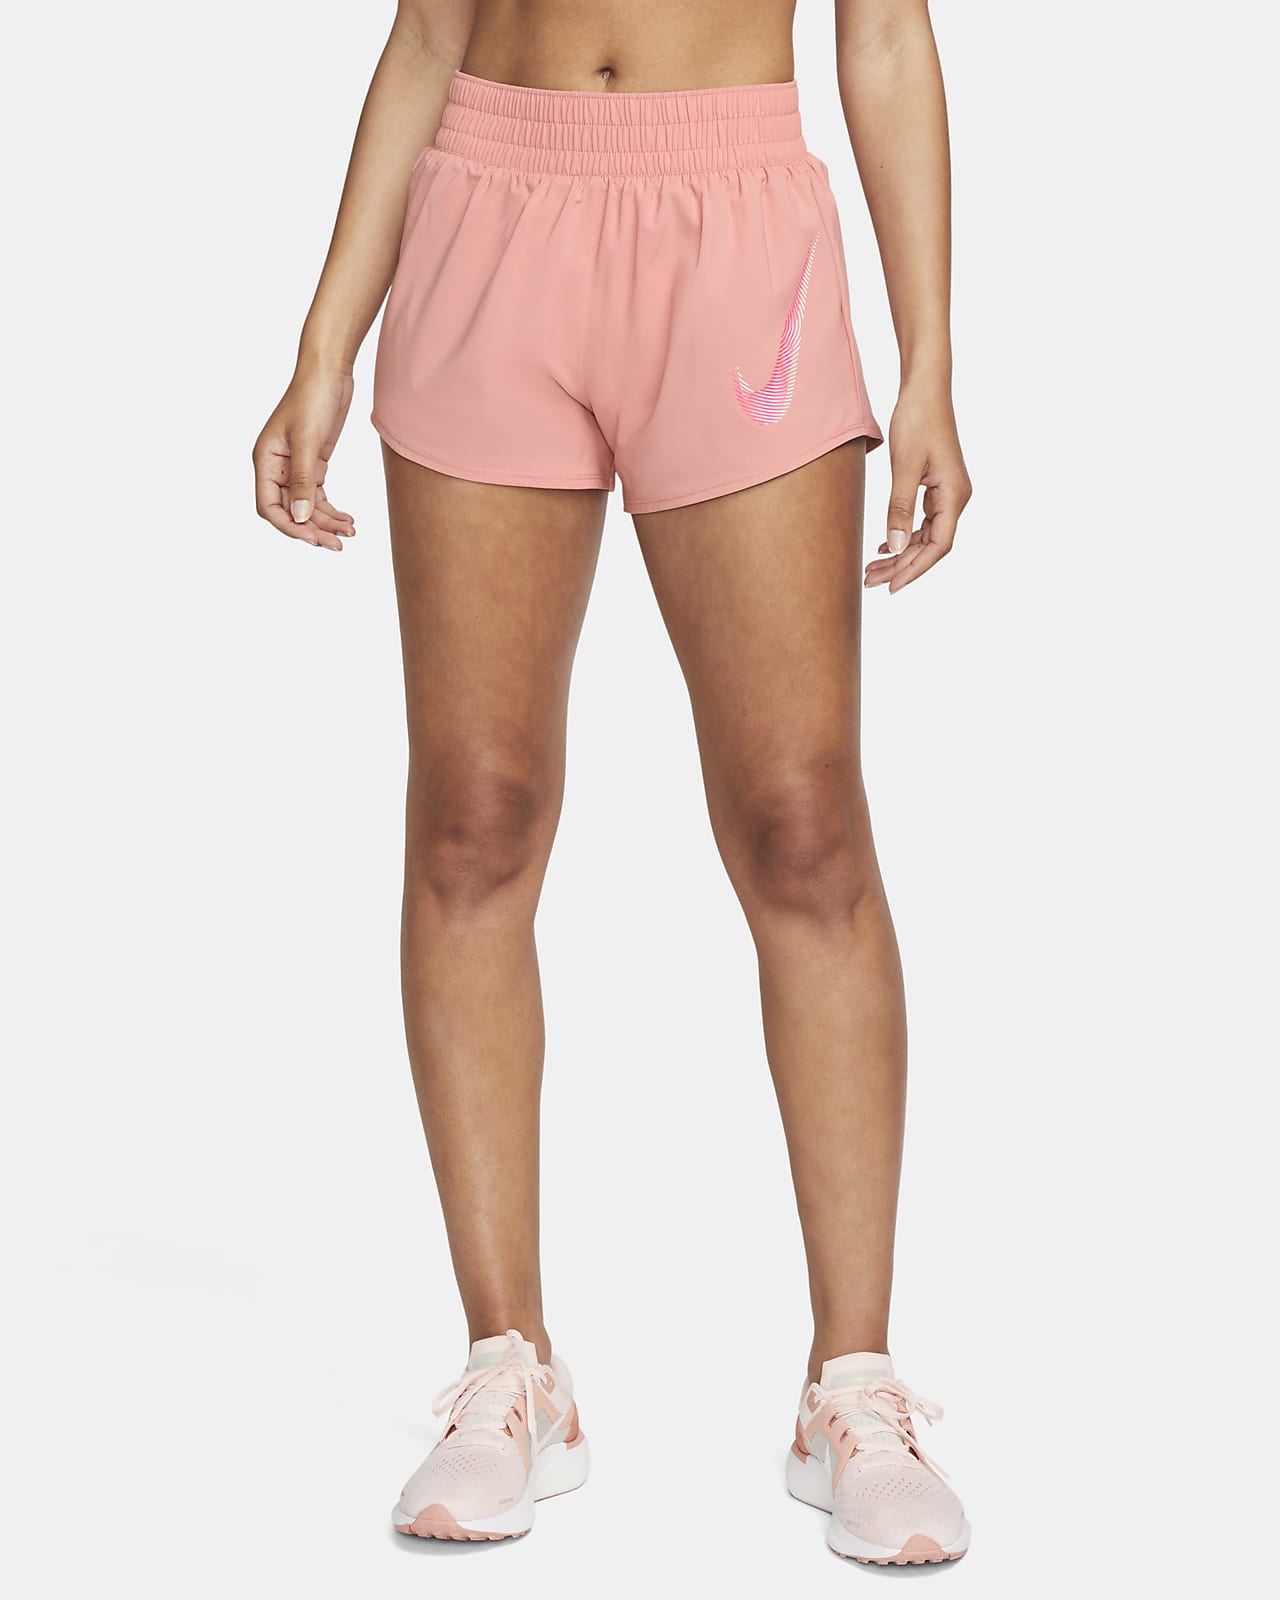 New! Nike Tempo Shorts Girls Size 2T peach white Athletic Gym Dri